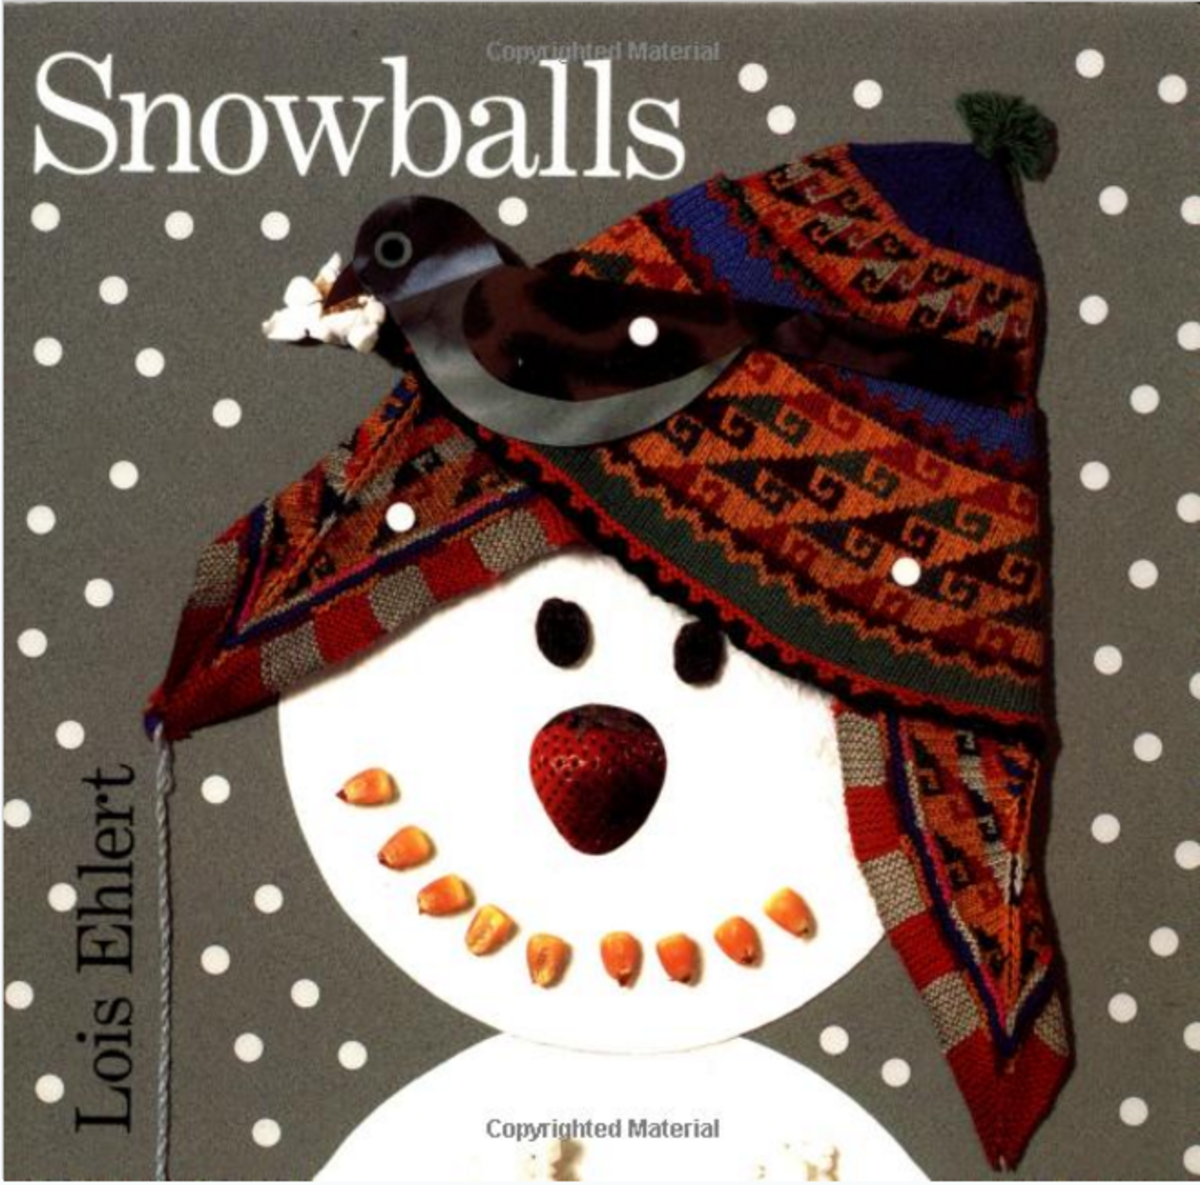 "Snowballs" by Lois Ehlert